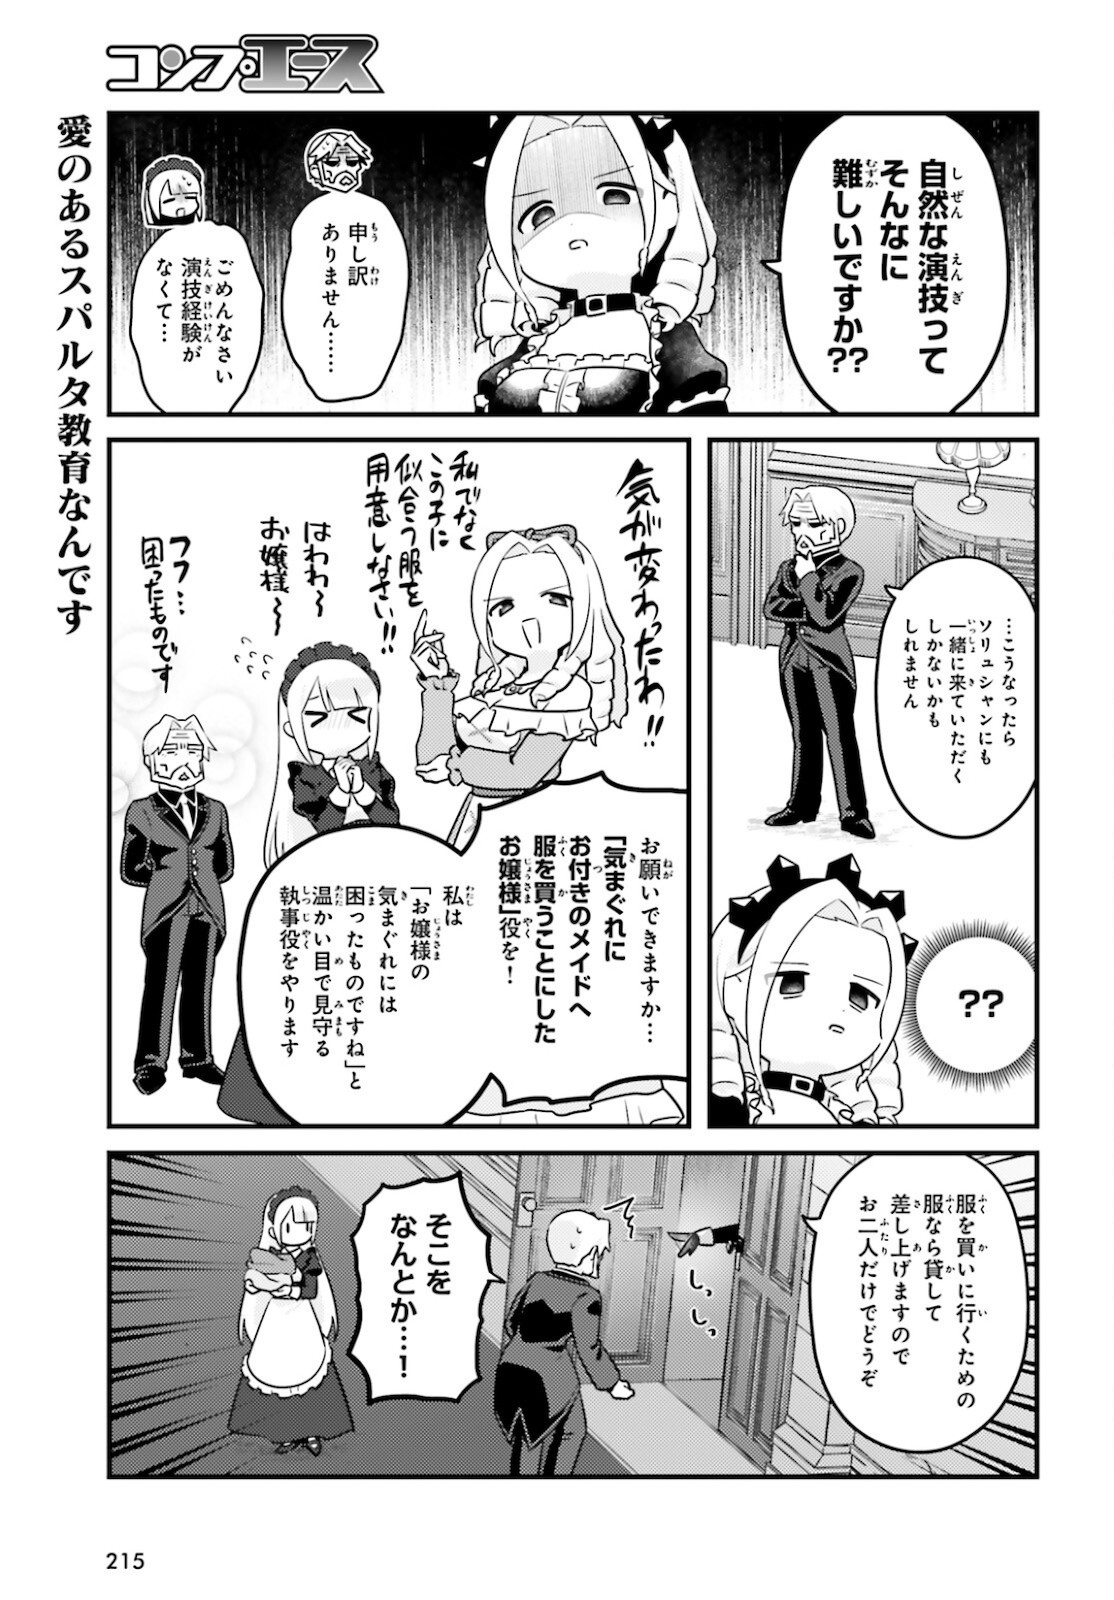 Overlord-Fushisha-no-Oh - Chapter 51 - Page 19